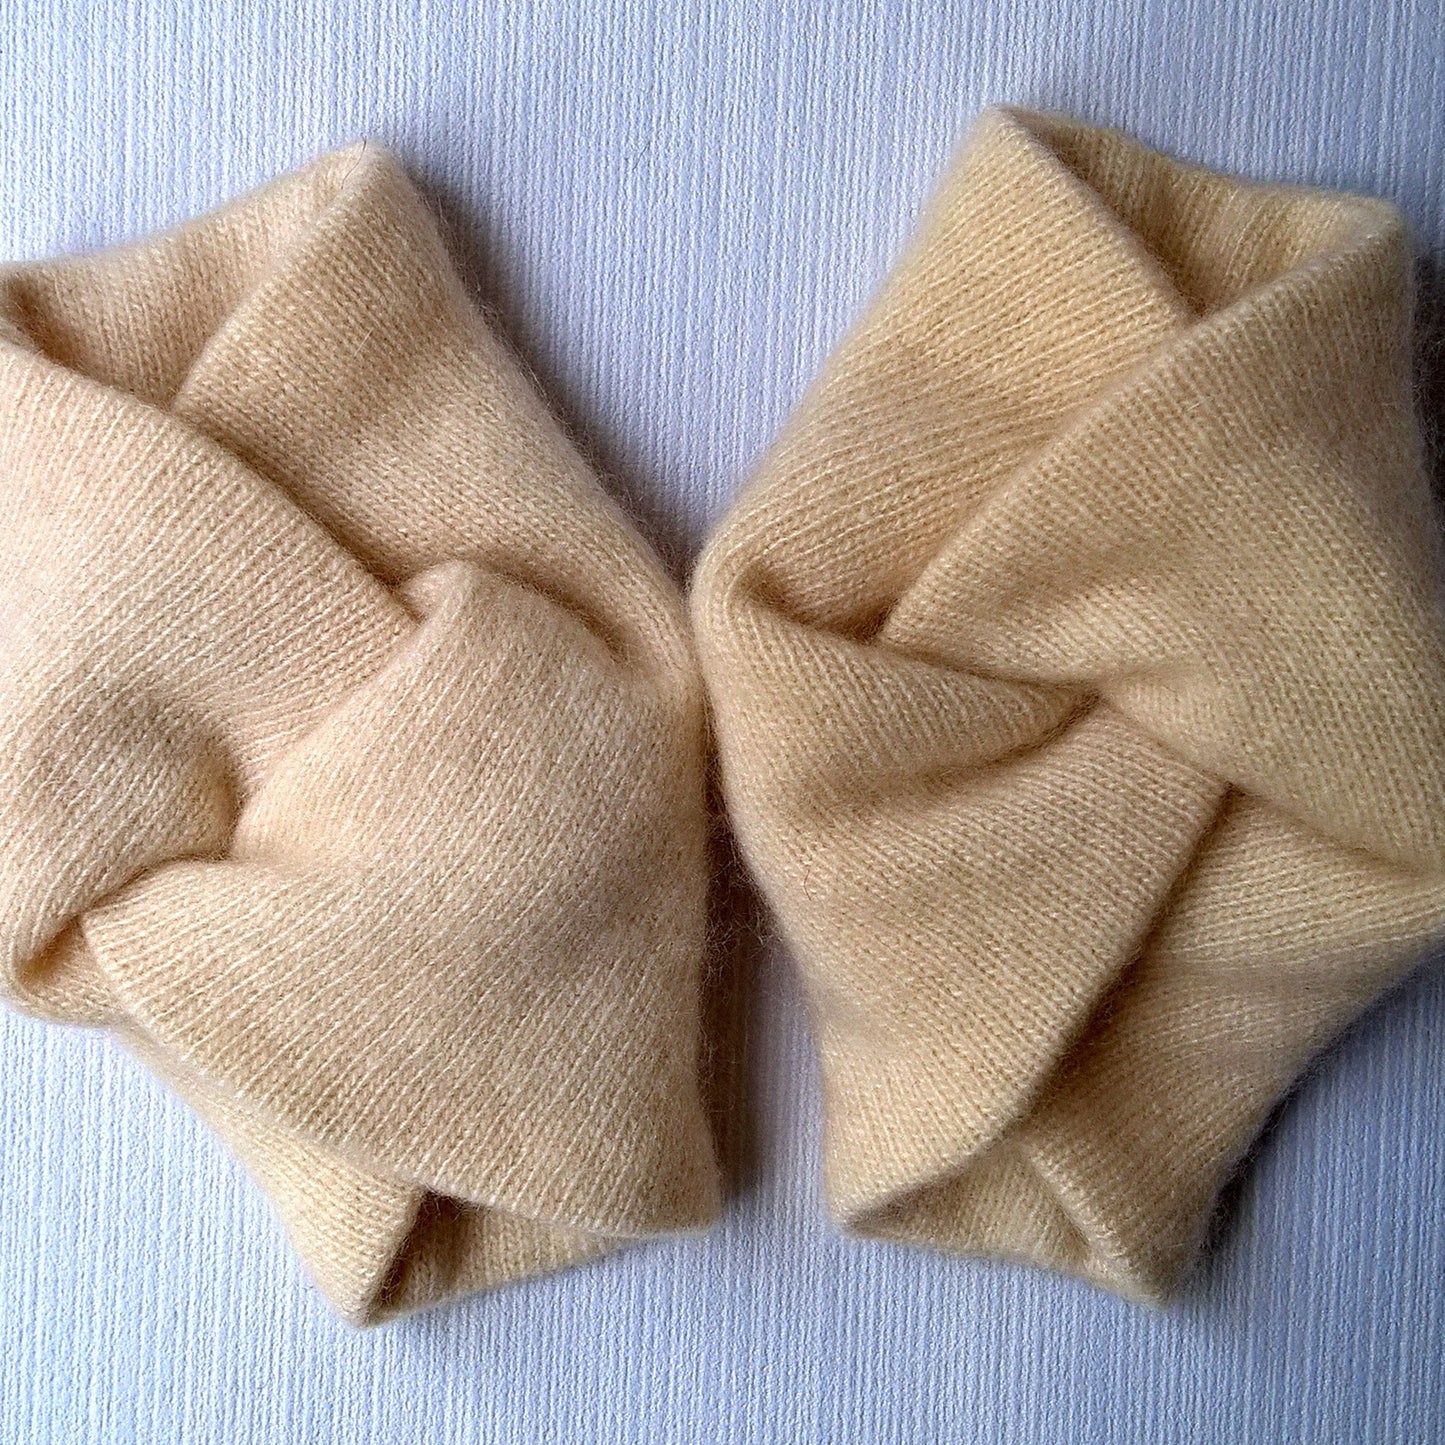 Double layered cashmere handmade wrist warmers in cream